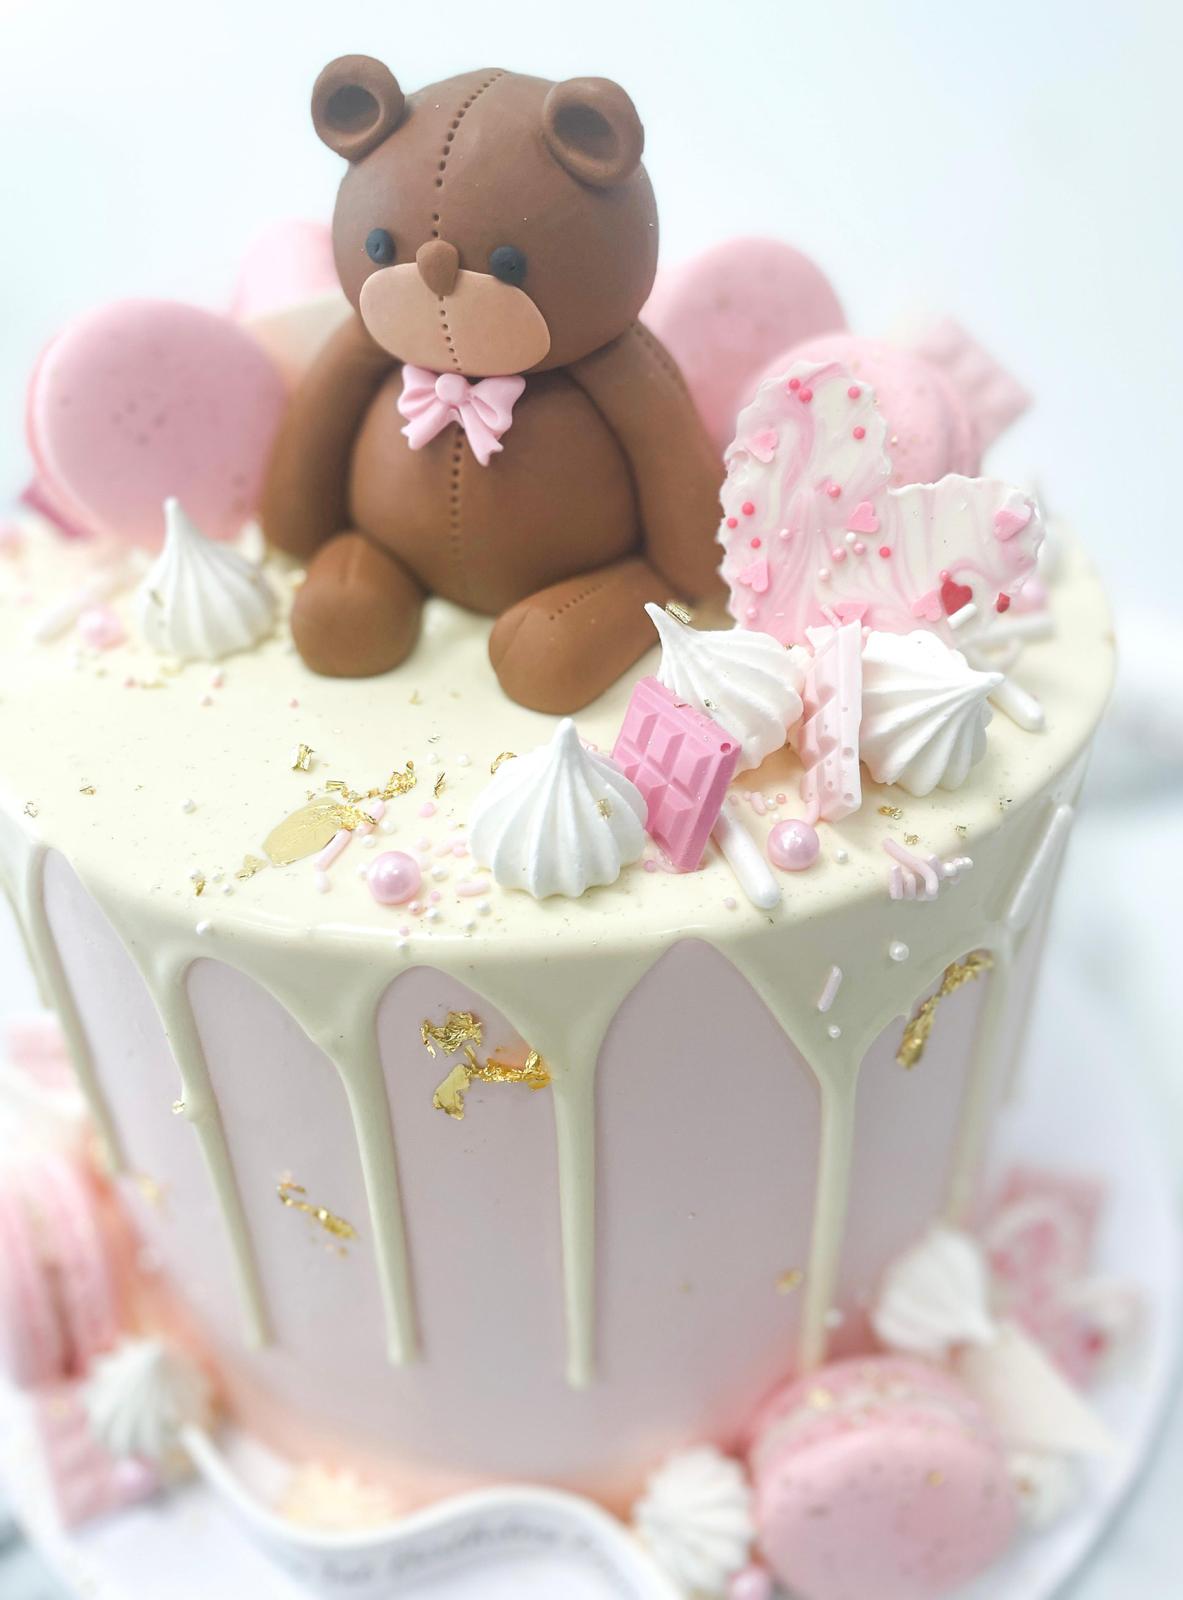 8,259 Teddy Bear Cake Images, Stock Photos & Vectors | Shutterstock